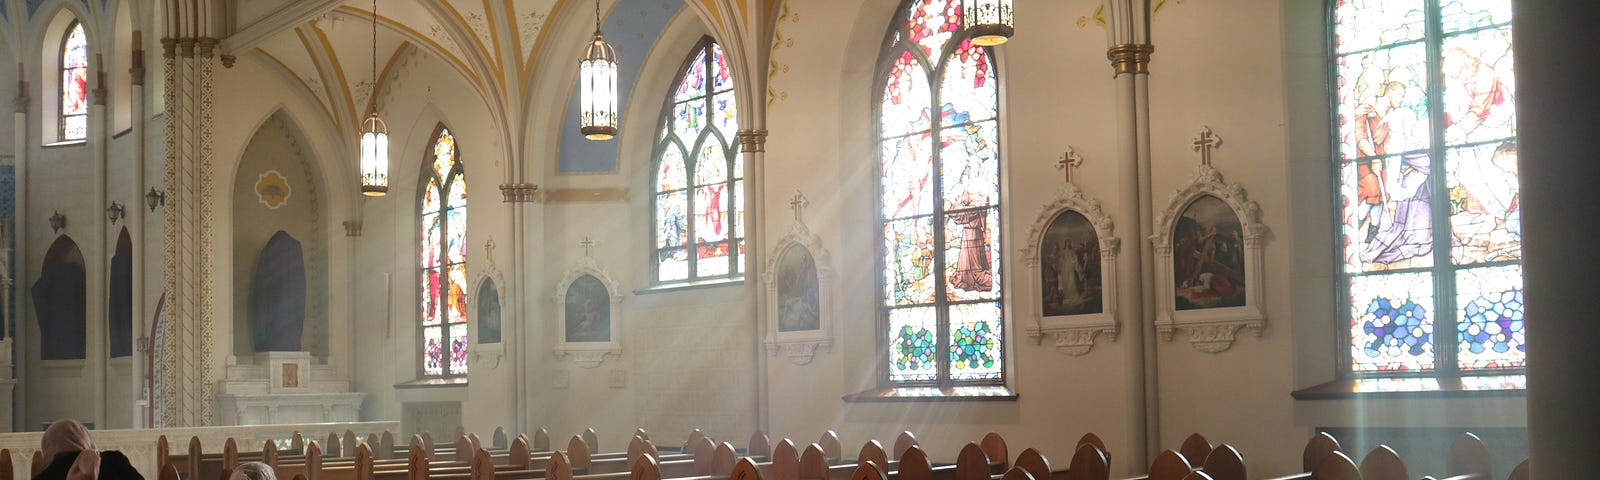 interior view of a Catholic church